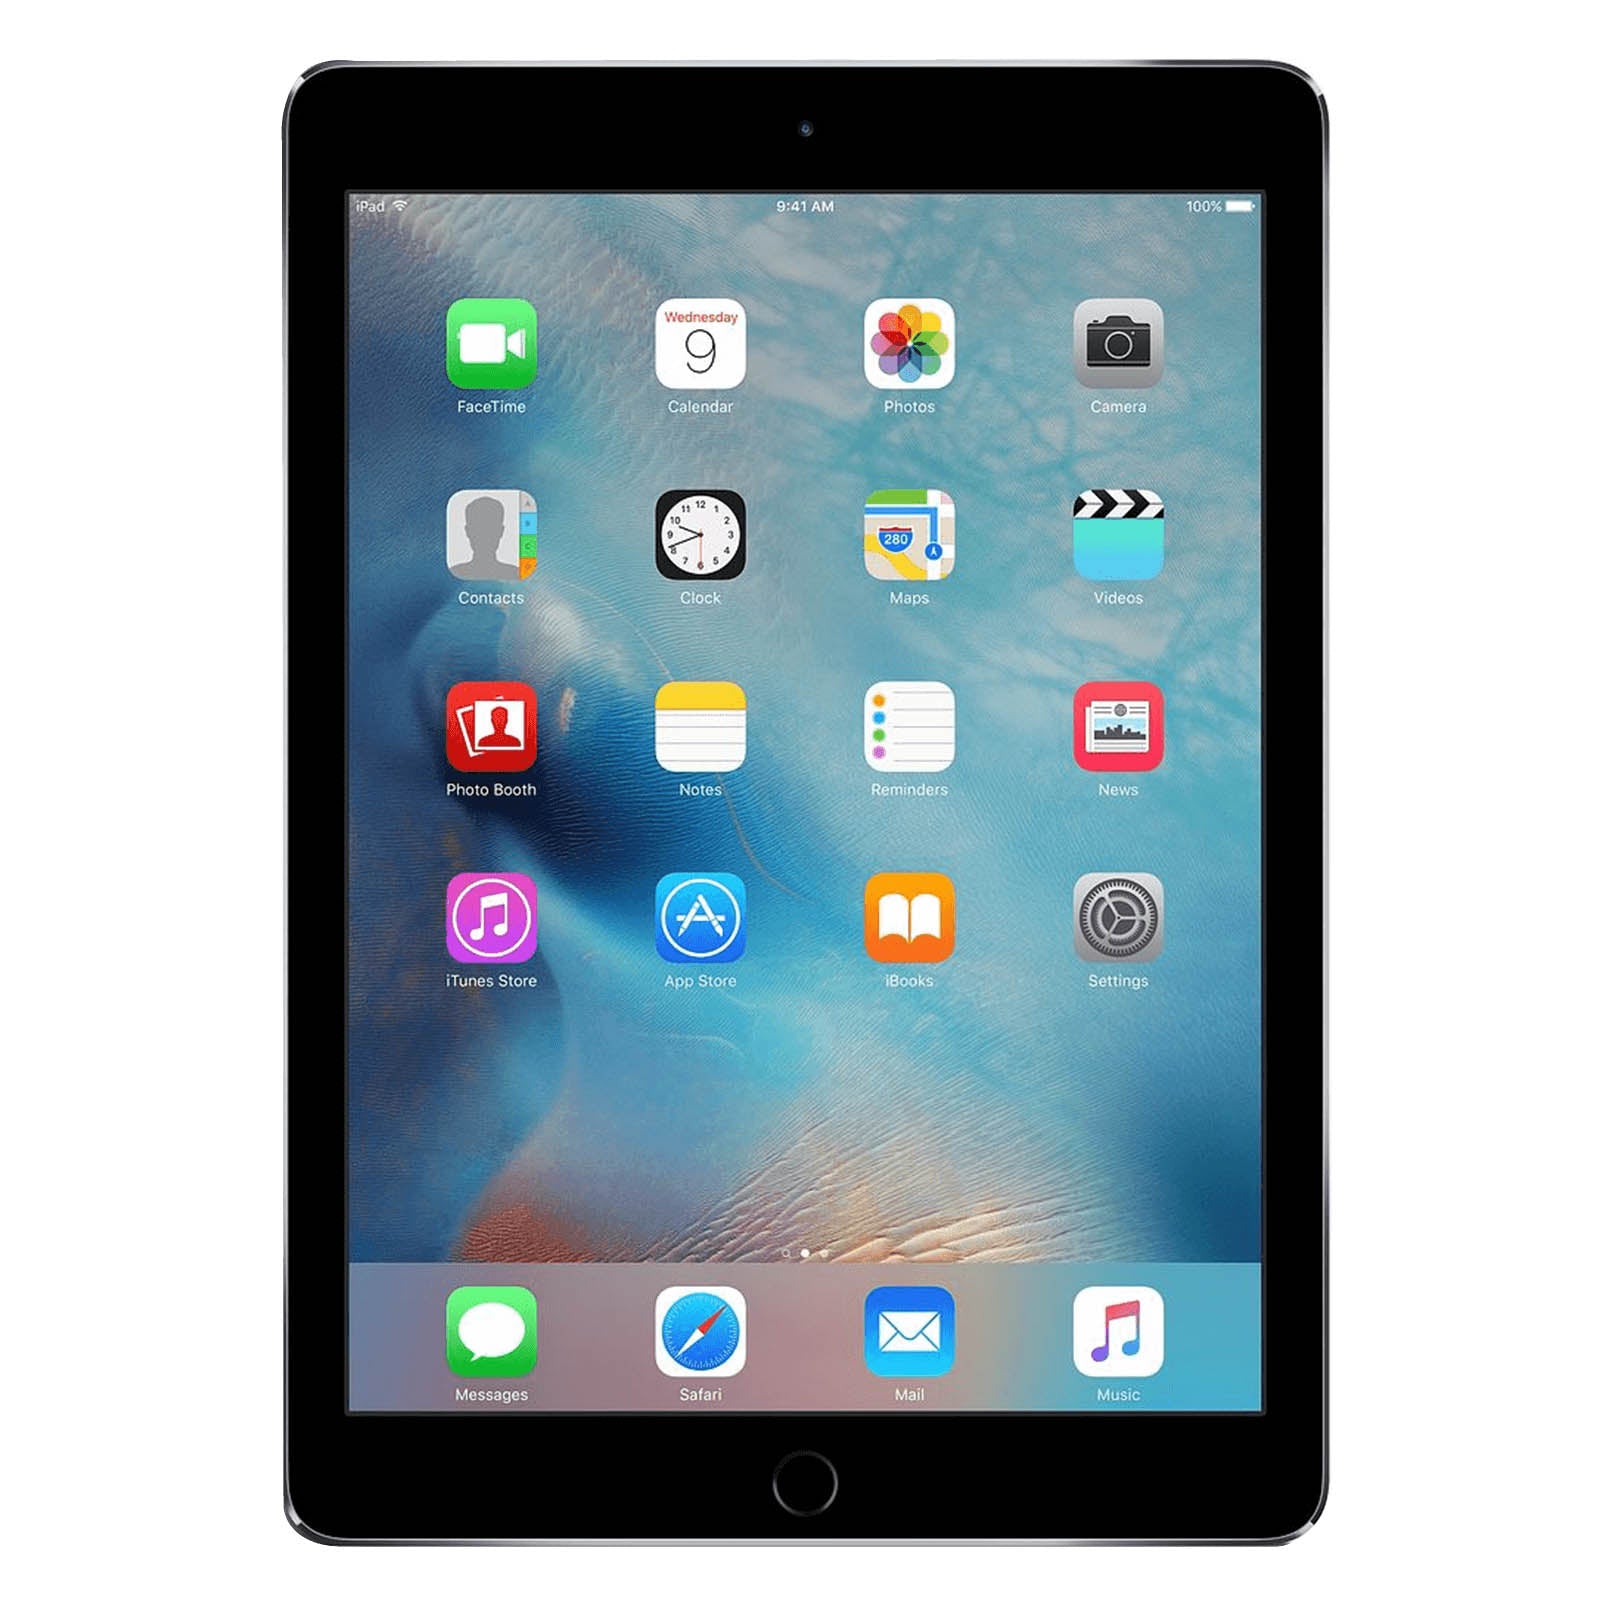 Apple iPad Air 2 128GB Space Grey Very Good Cellular - Unlocked